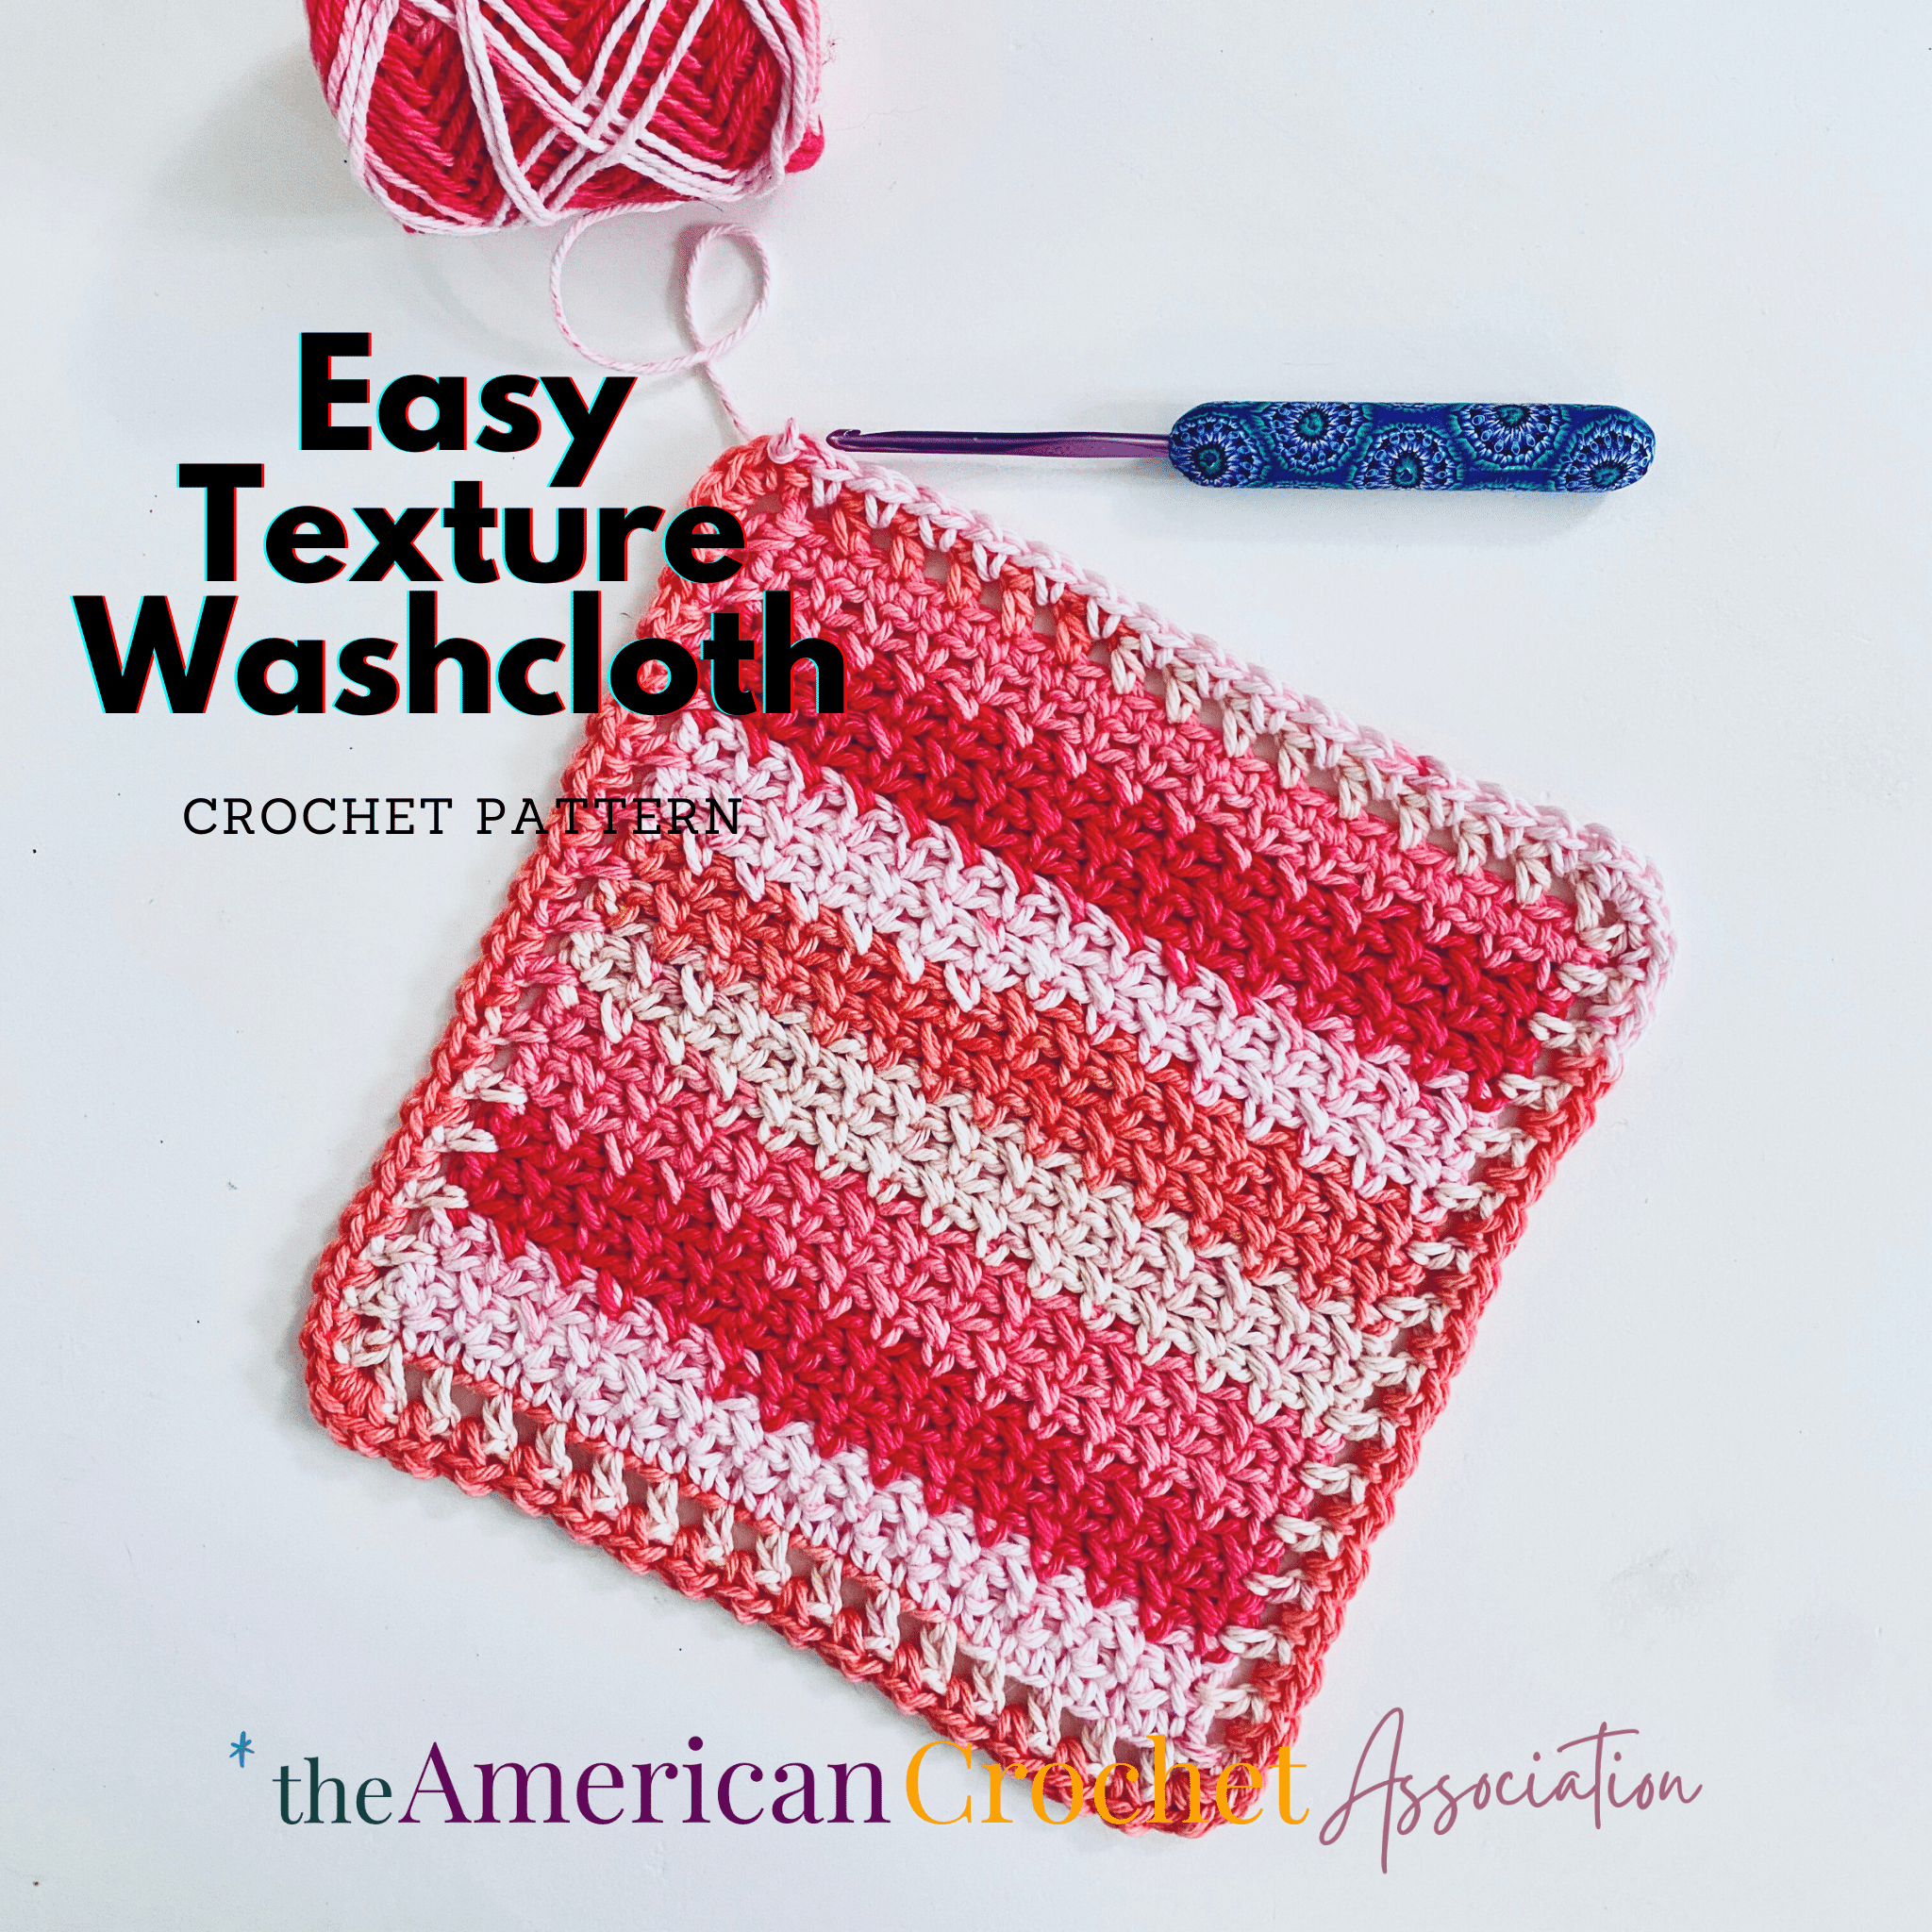 Easy Texture Washcloth: Quick & Easy Crochet Stitch Pattern